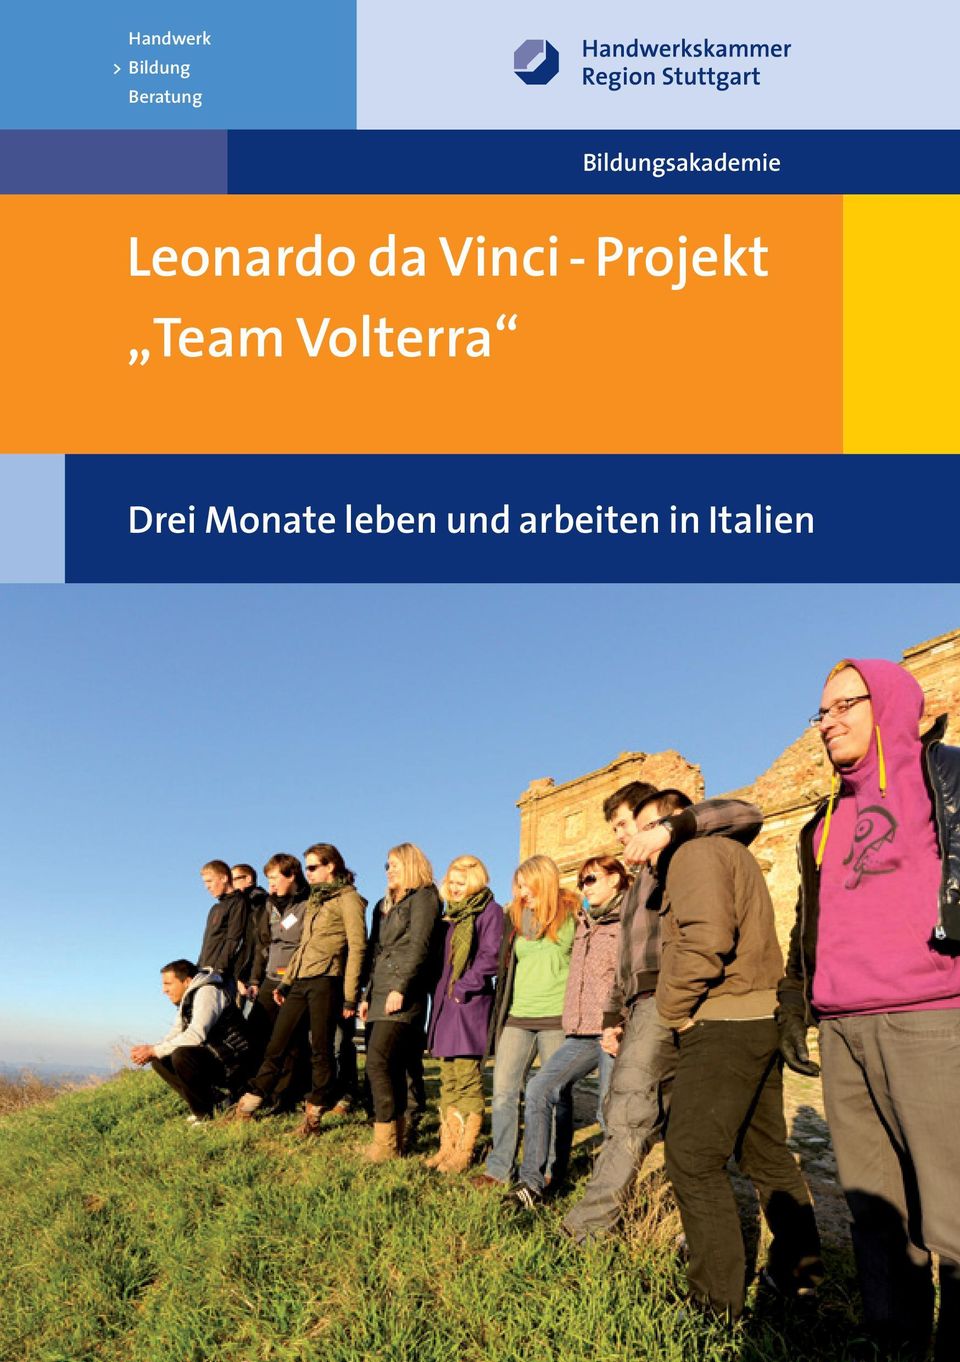 Vinci - Projekt Team Volterra